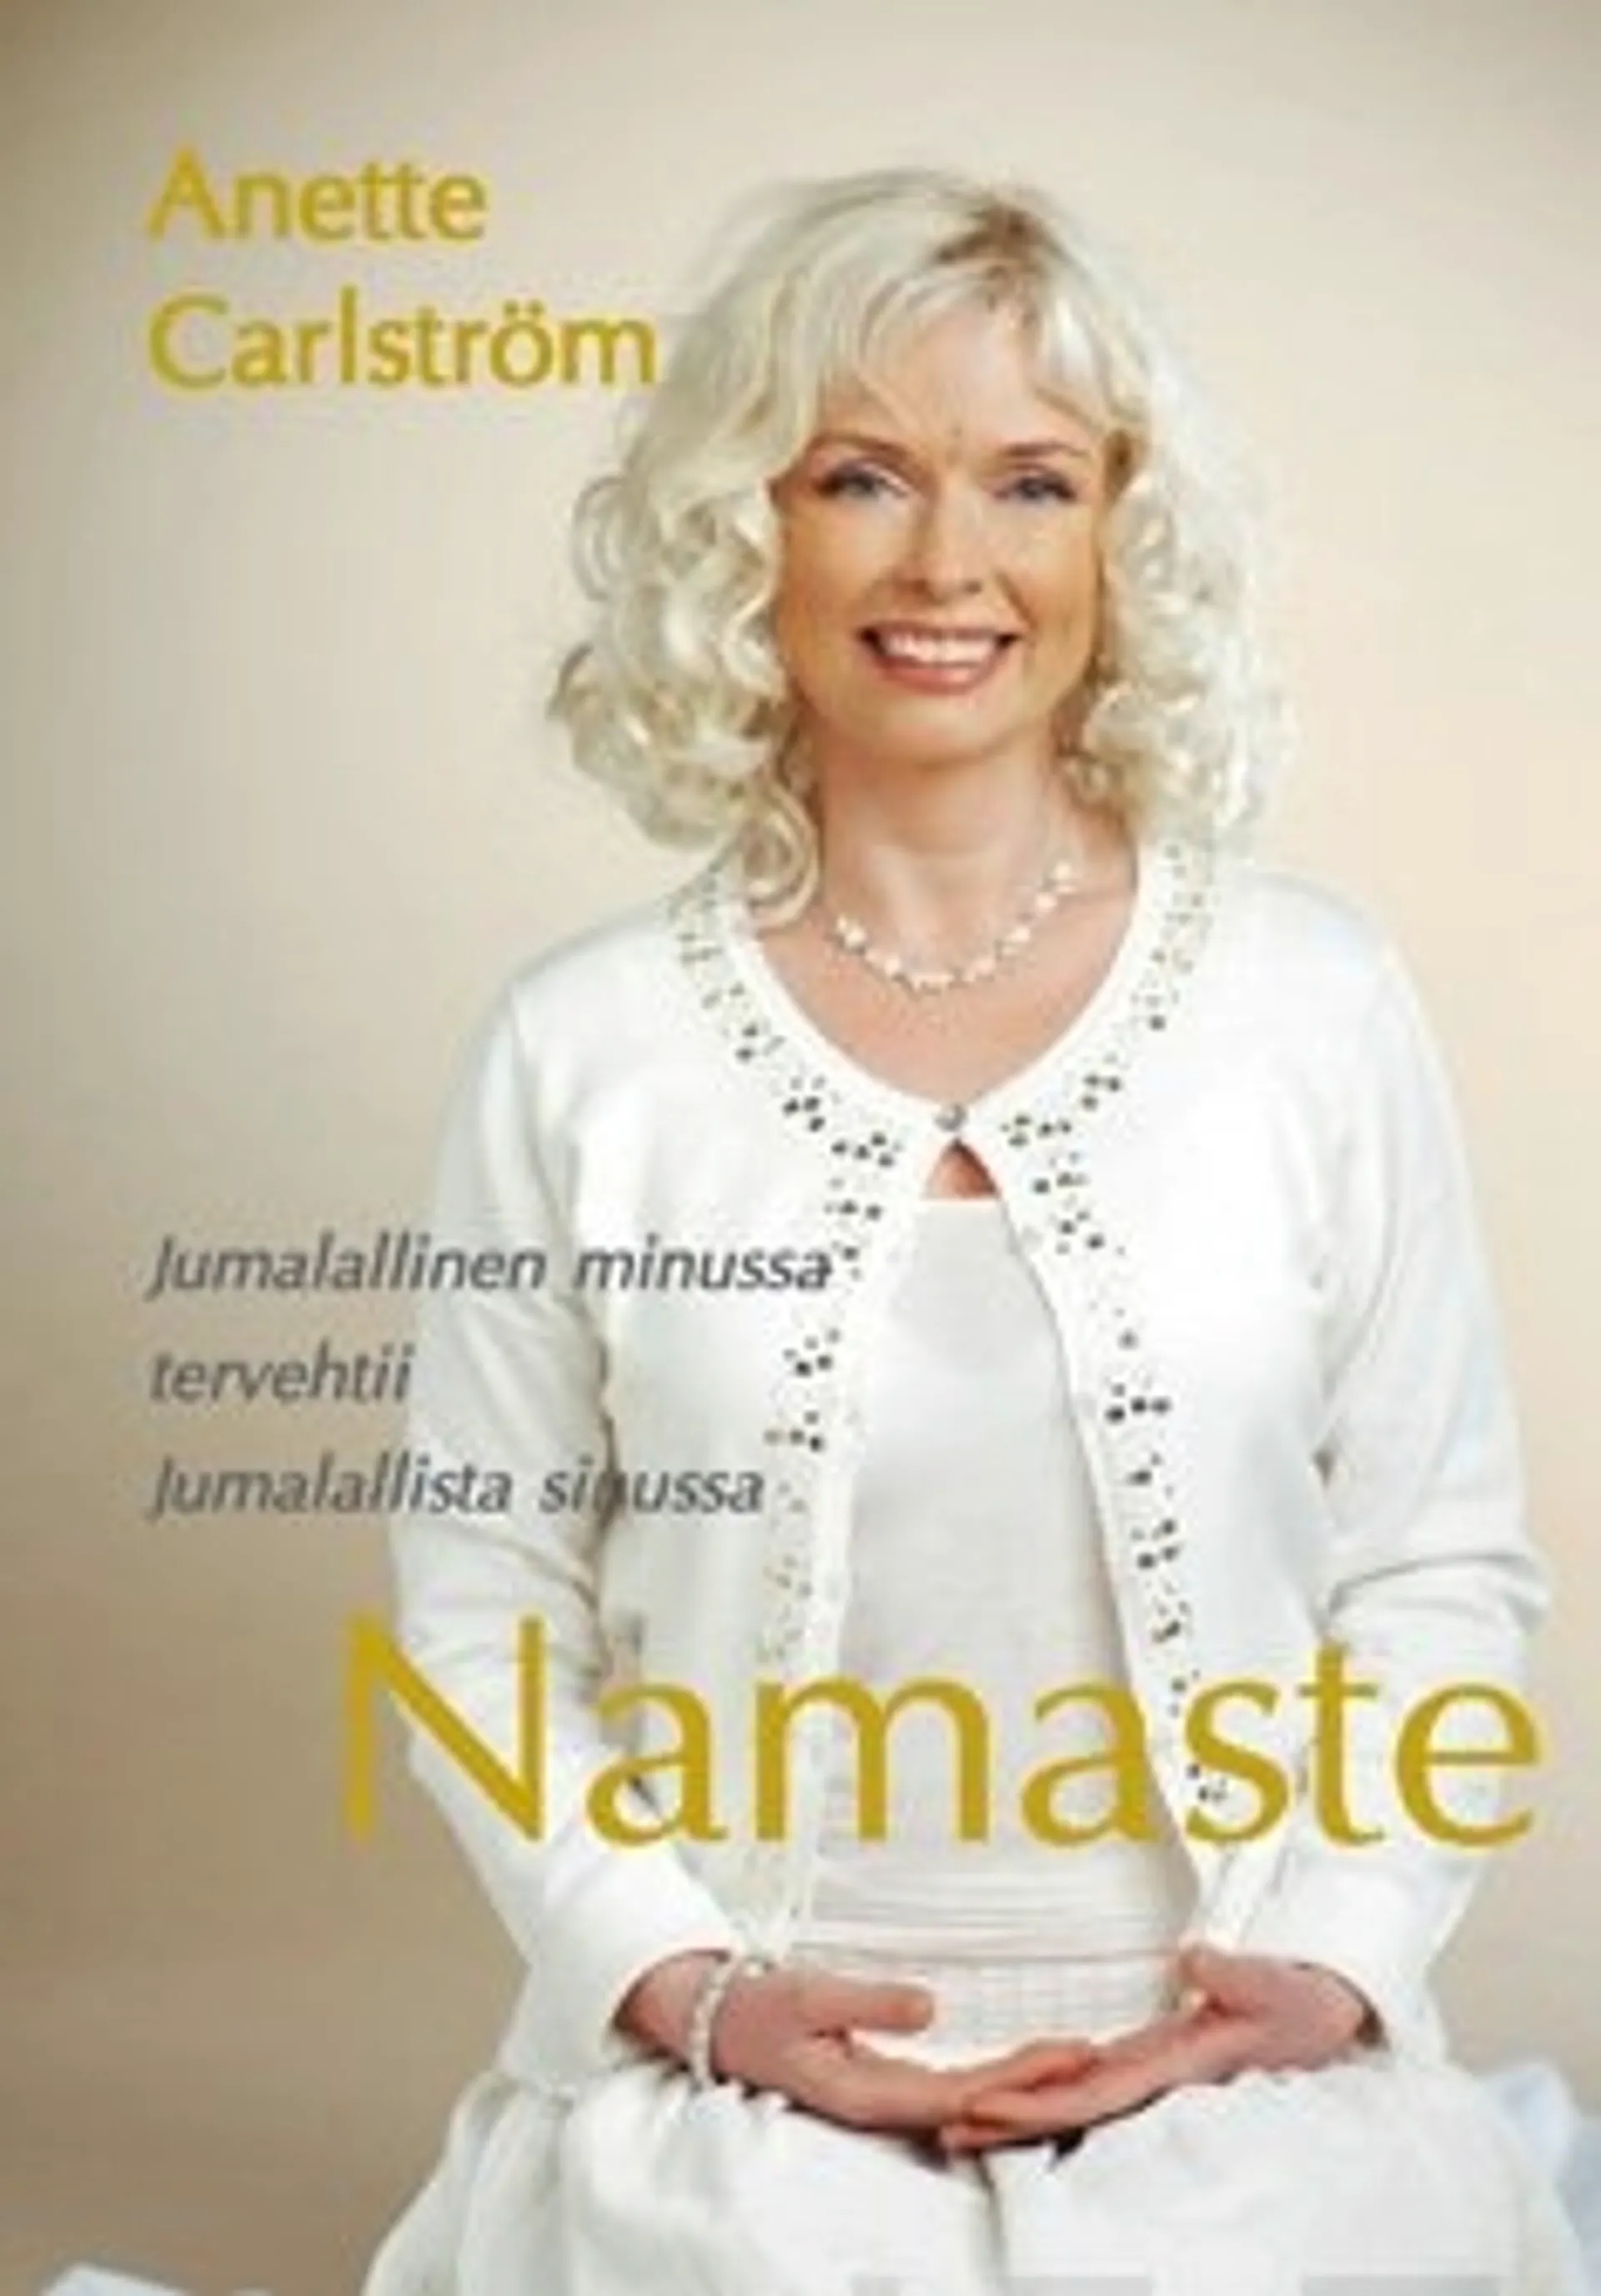 Carlström, Namaste